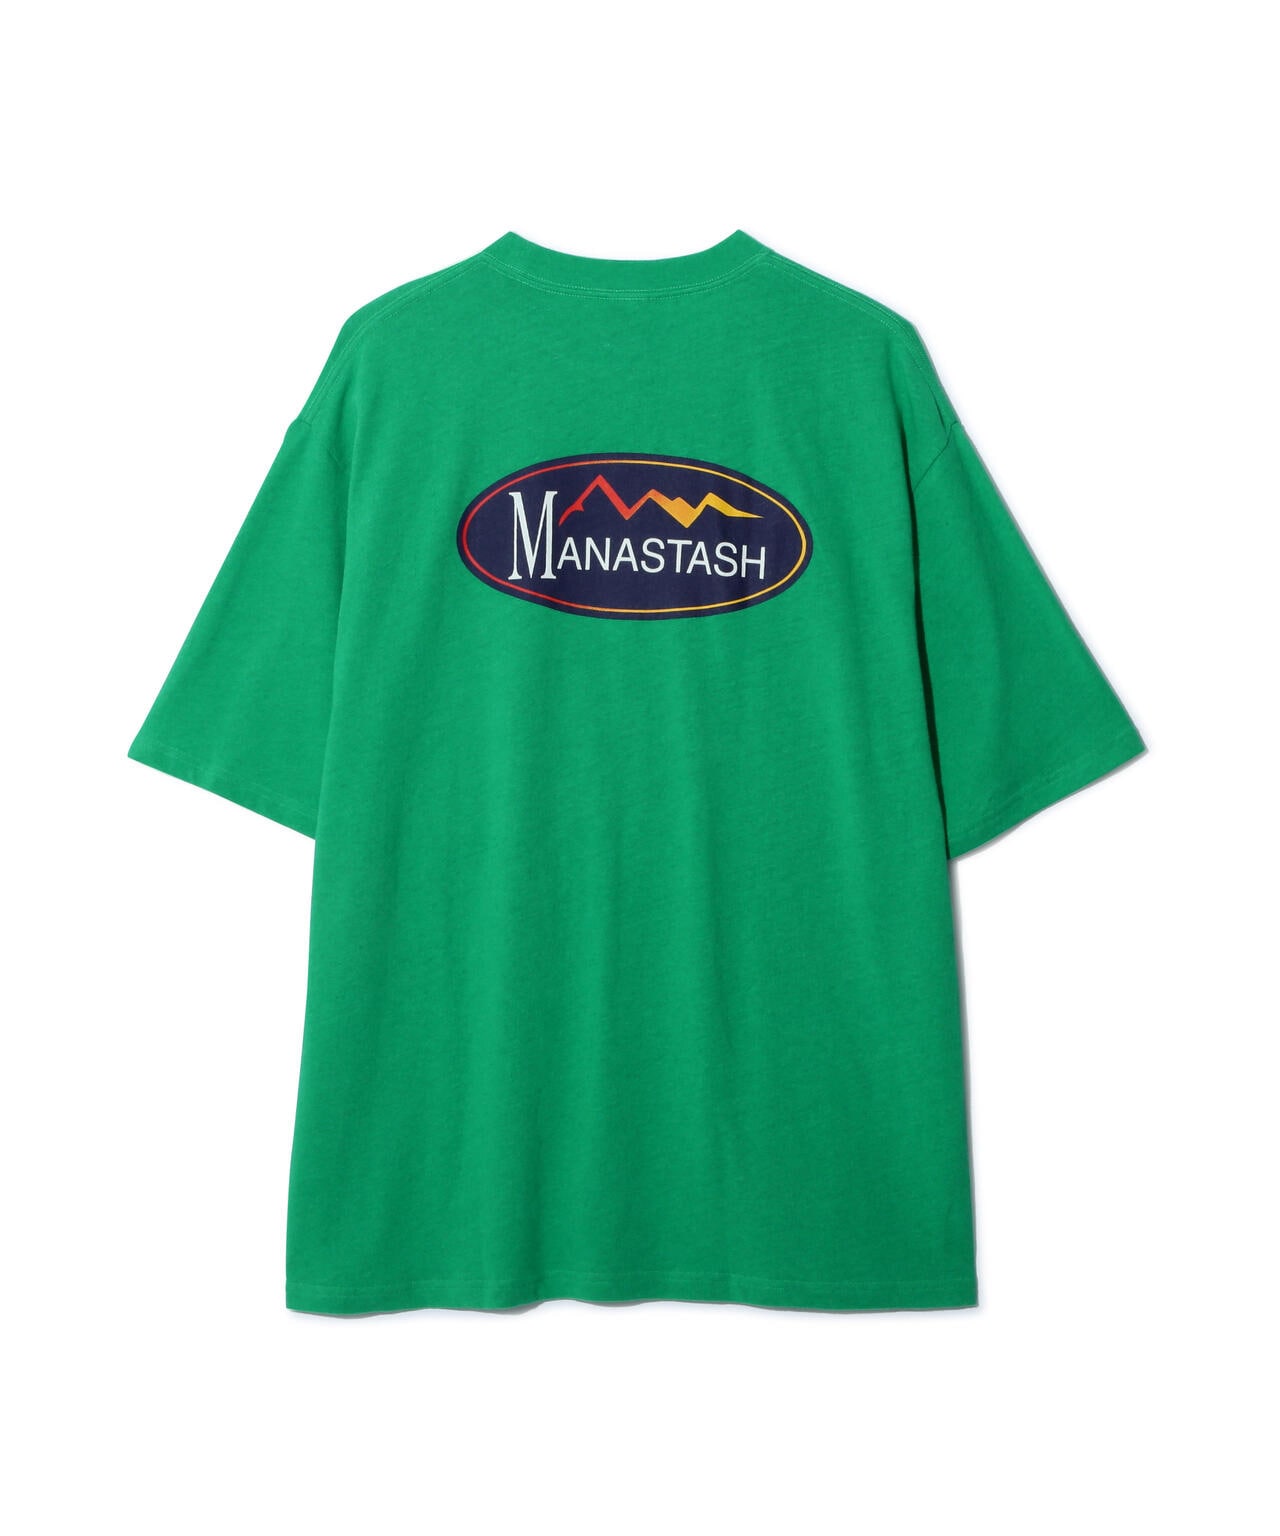 MANASTASH/マナスタッシュ/HEMP TEE ORIGINAL LOGO/ヘンプTシャツ | MANASTASH ( マナスタッシュ ) |  US ONLINE STORE（US オンラインストア）